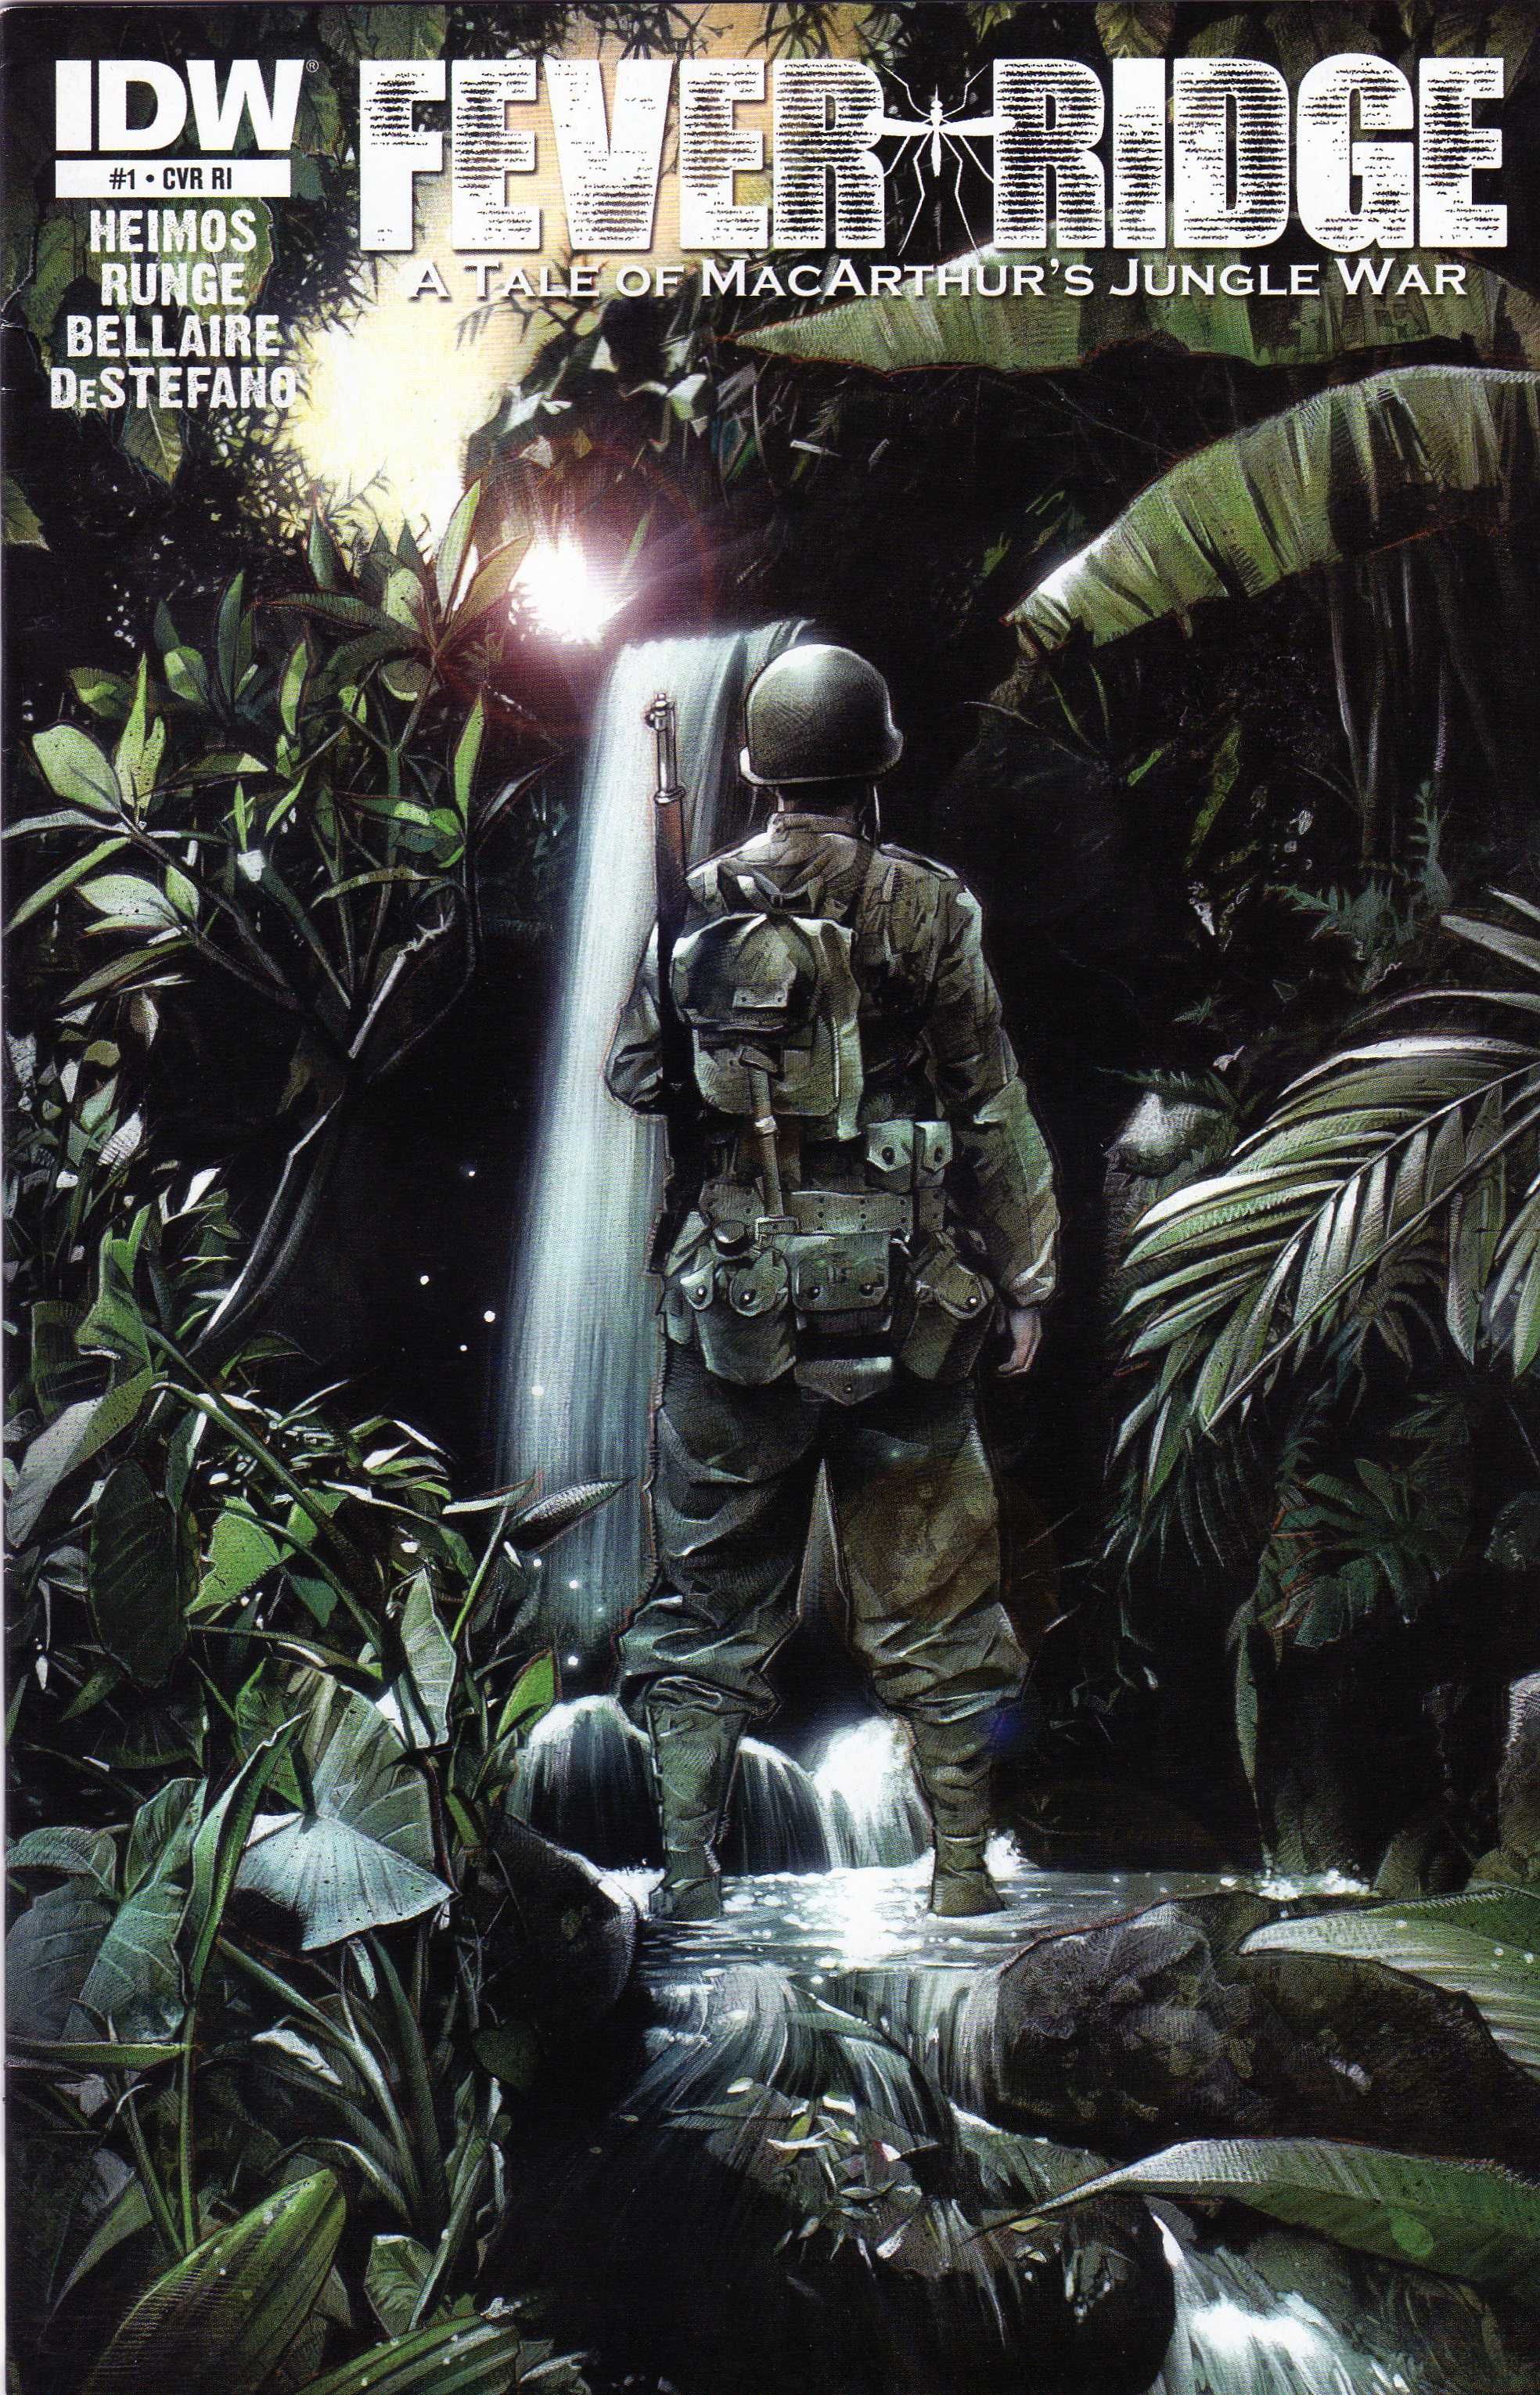 Fever Ridge A Tale of MacArthur's Jungle War #1 benzi desenate